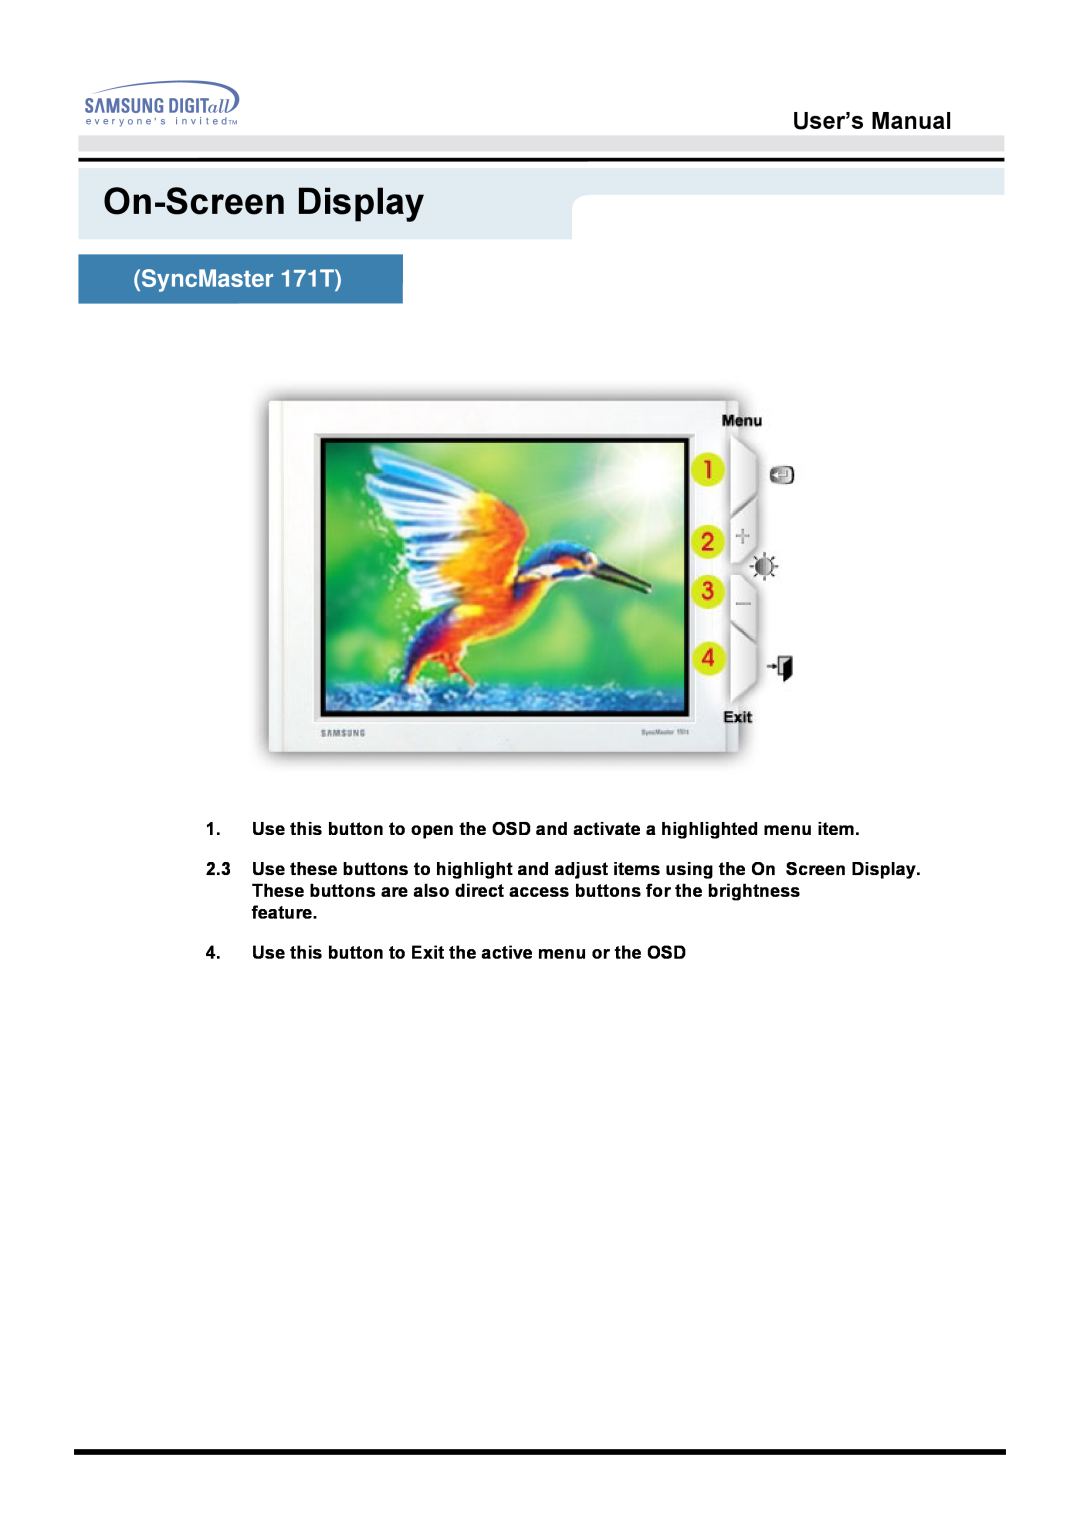 Samsung 171B, 171S, 181B, 171T, 171Q manual SyncMaster 171T, On-Screen Display, User’s Manual 